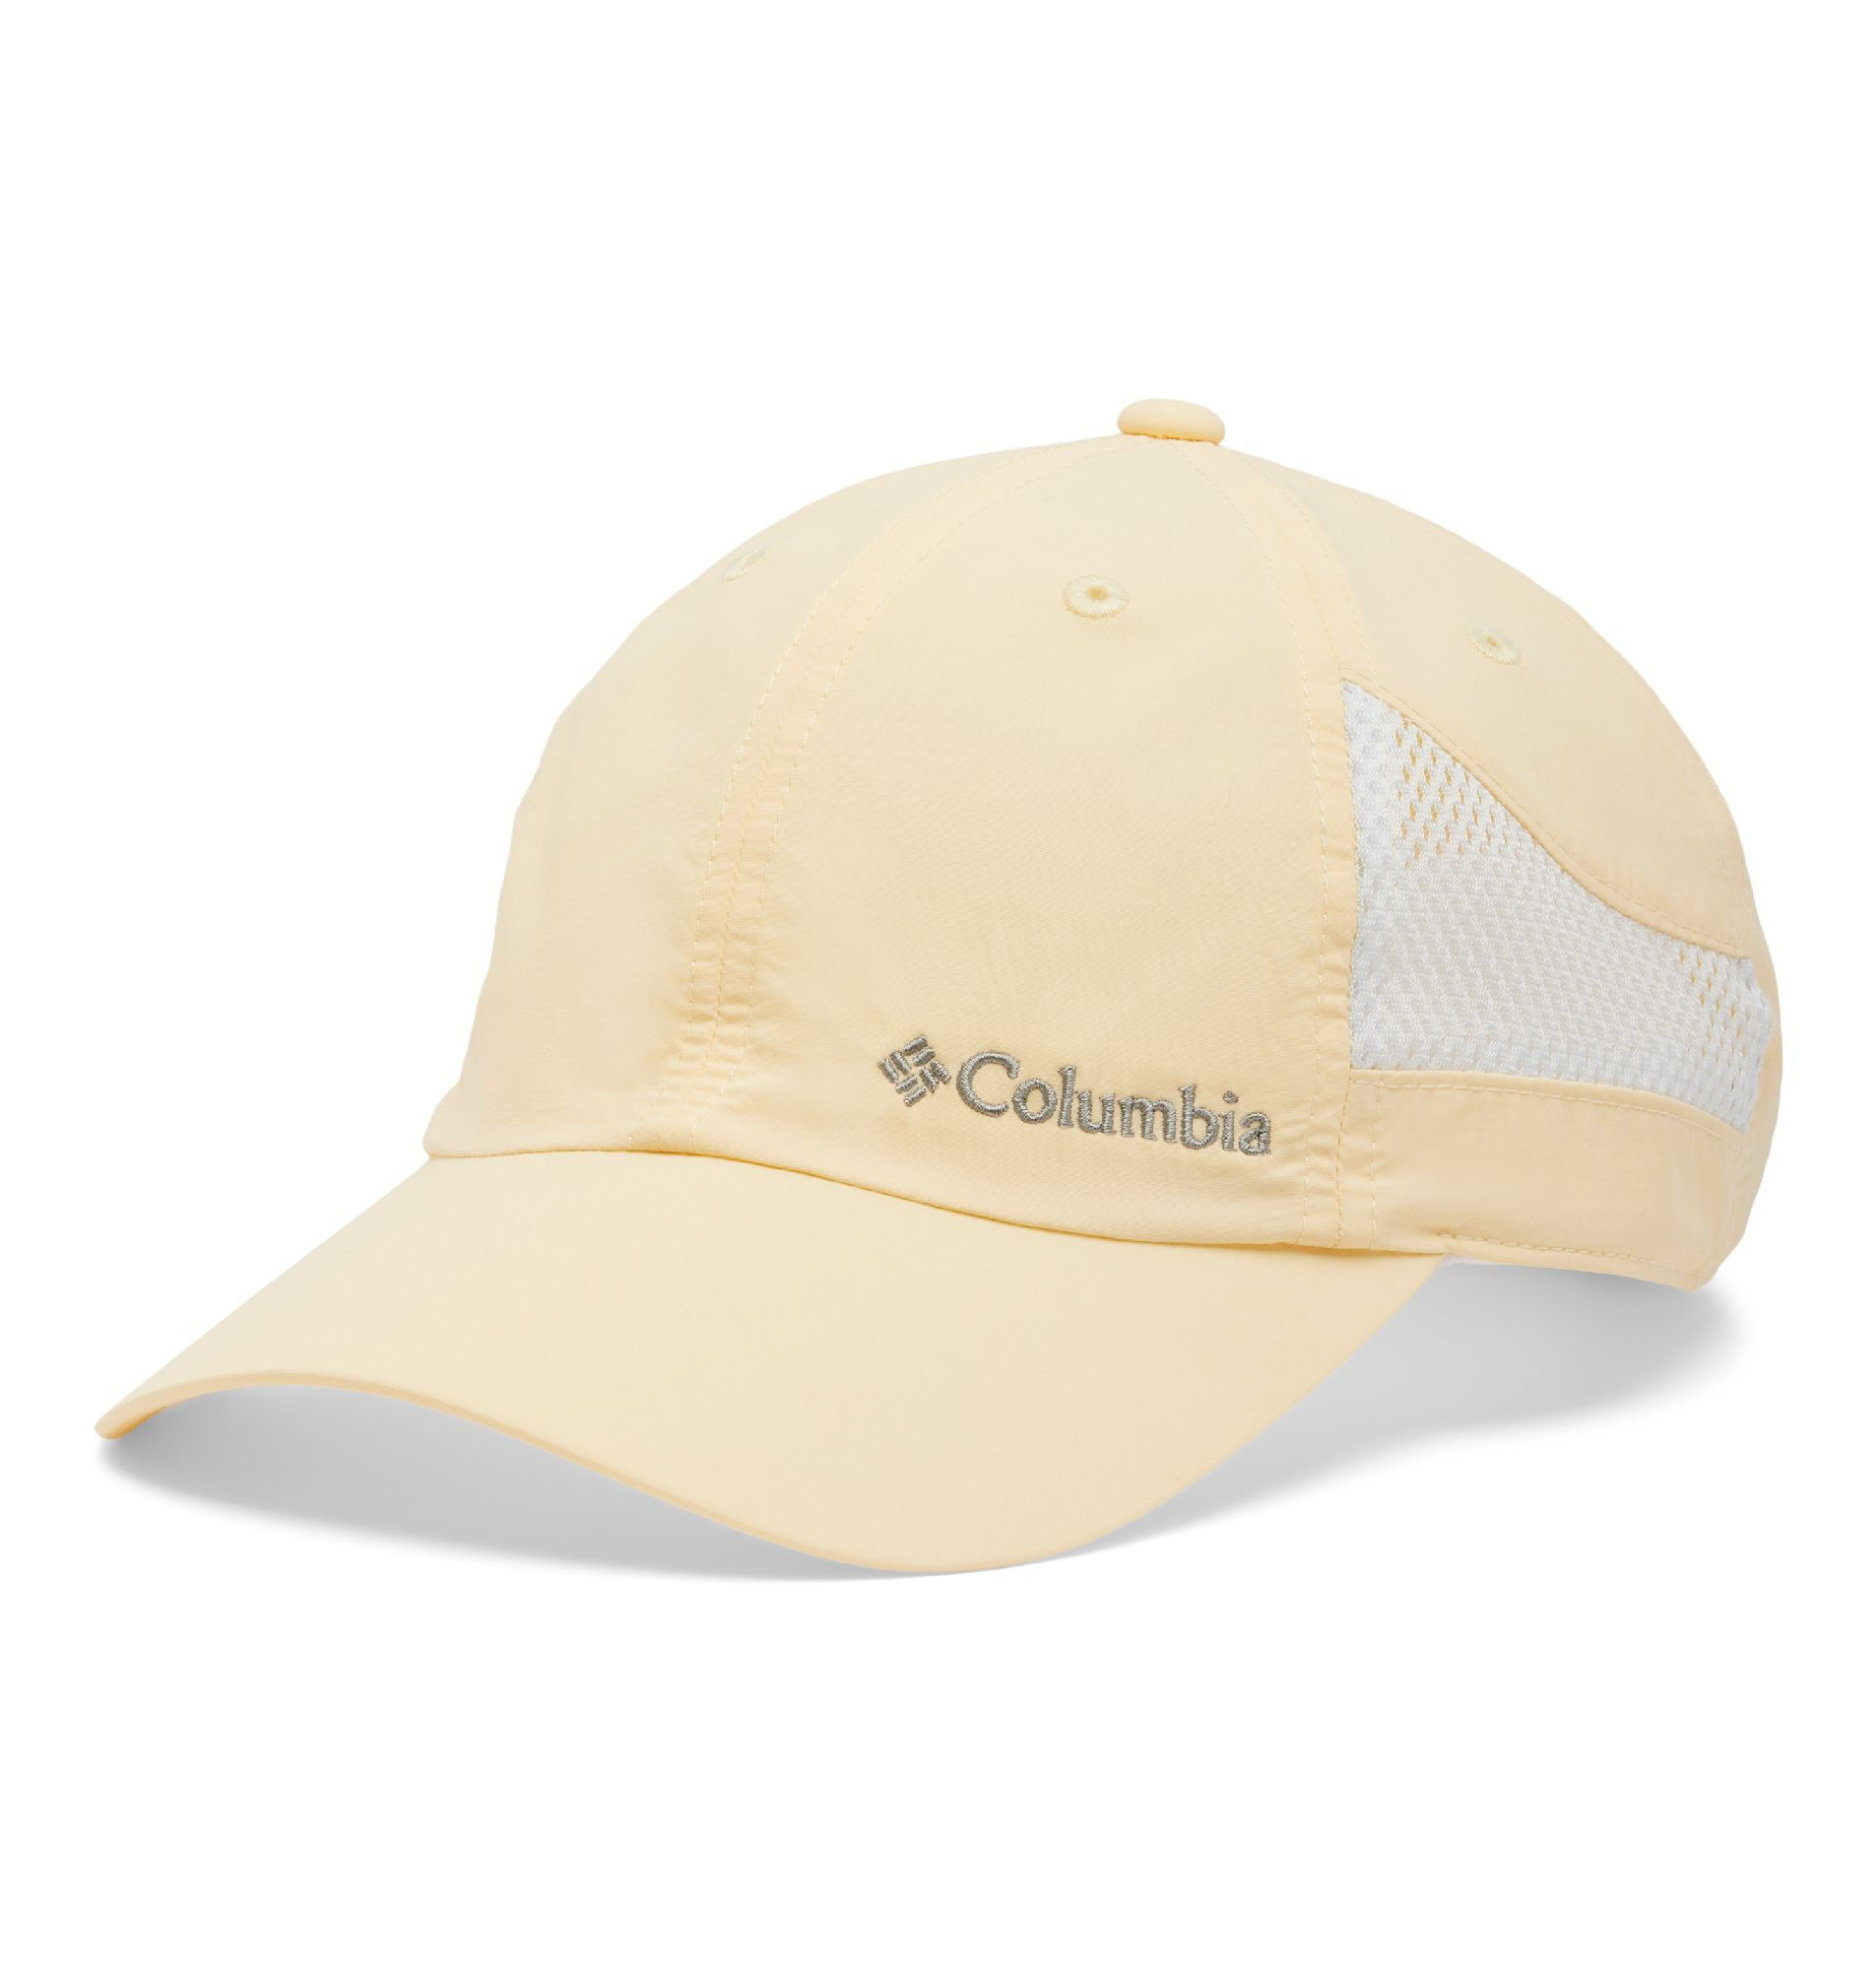 Columbia Tech Shade Hat - Keps